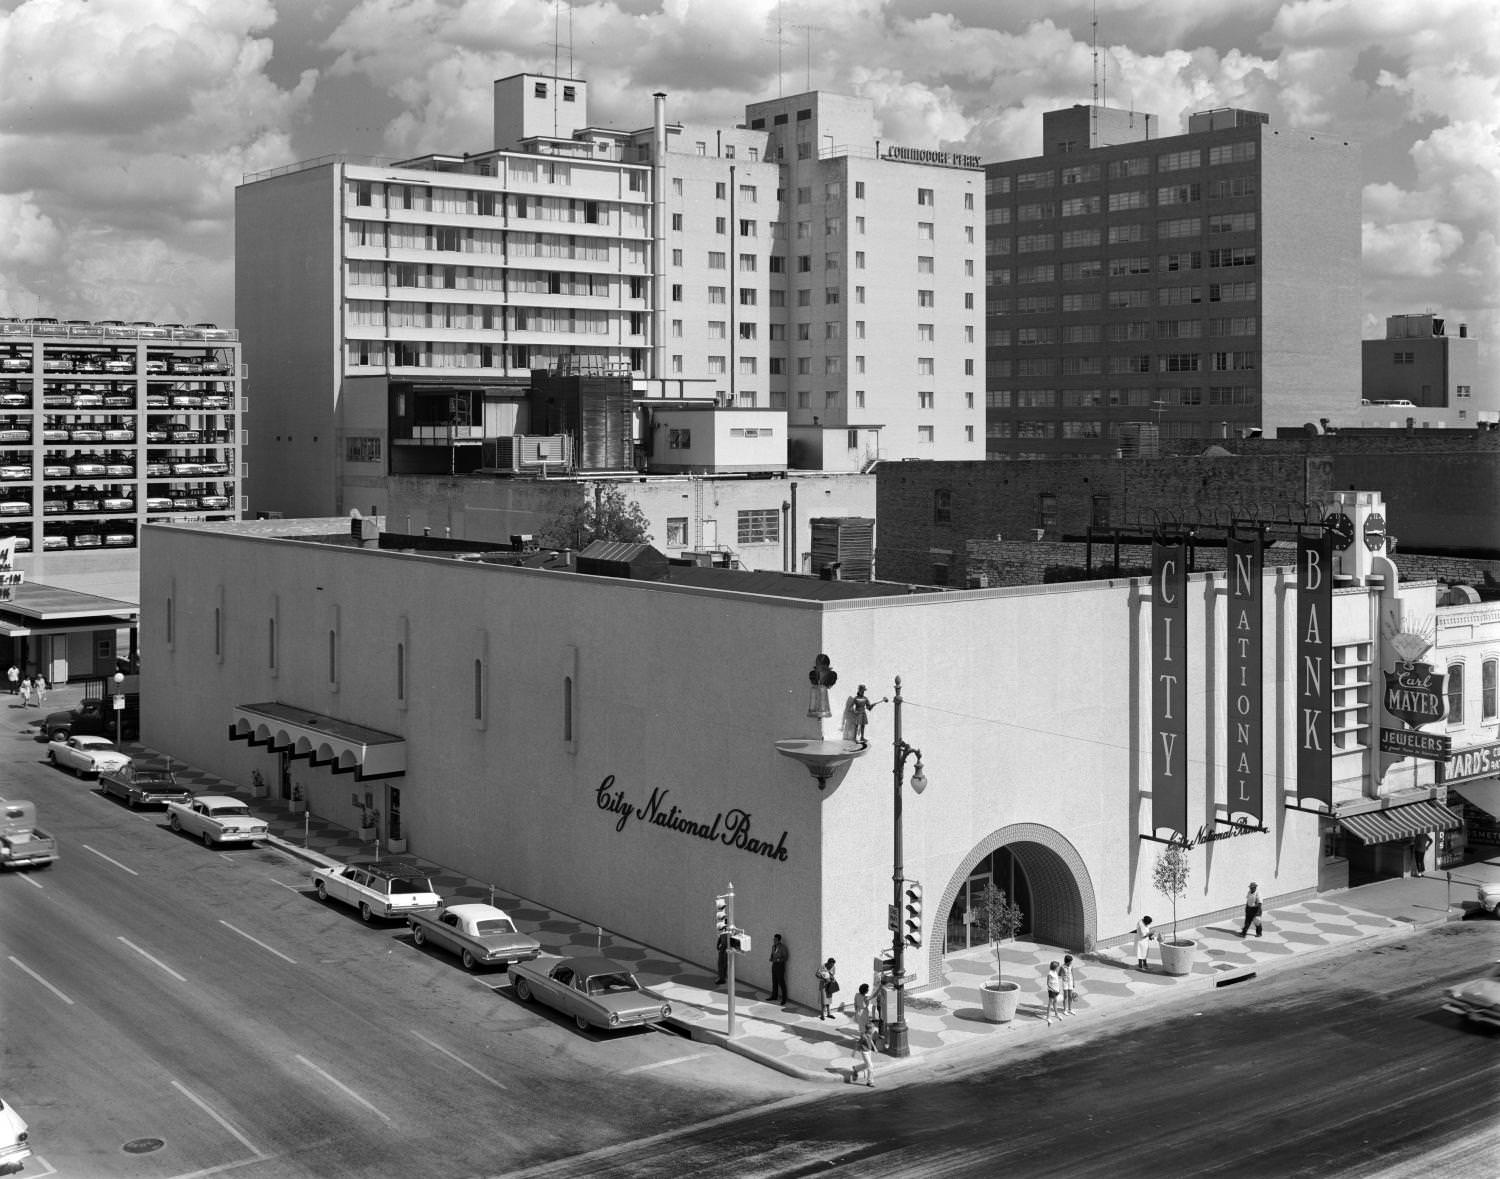 The City National Bank building at 823 Congress Avenue, Austin, Texas, 1963